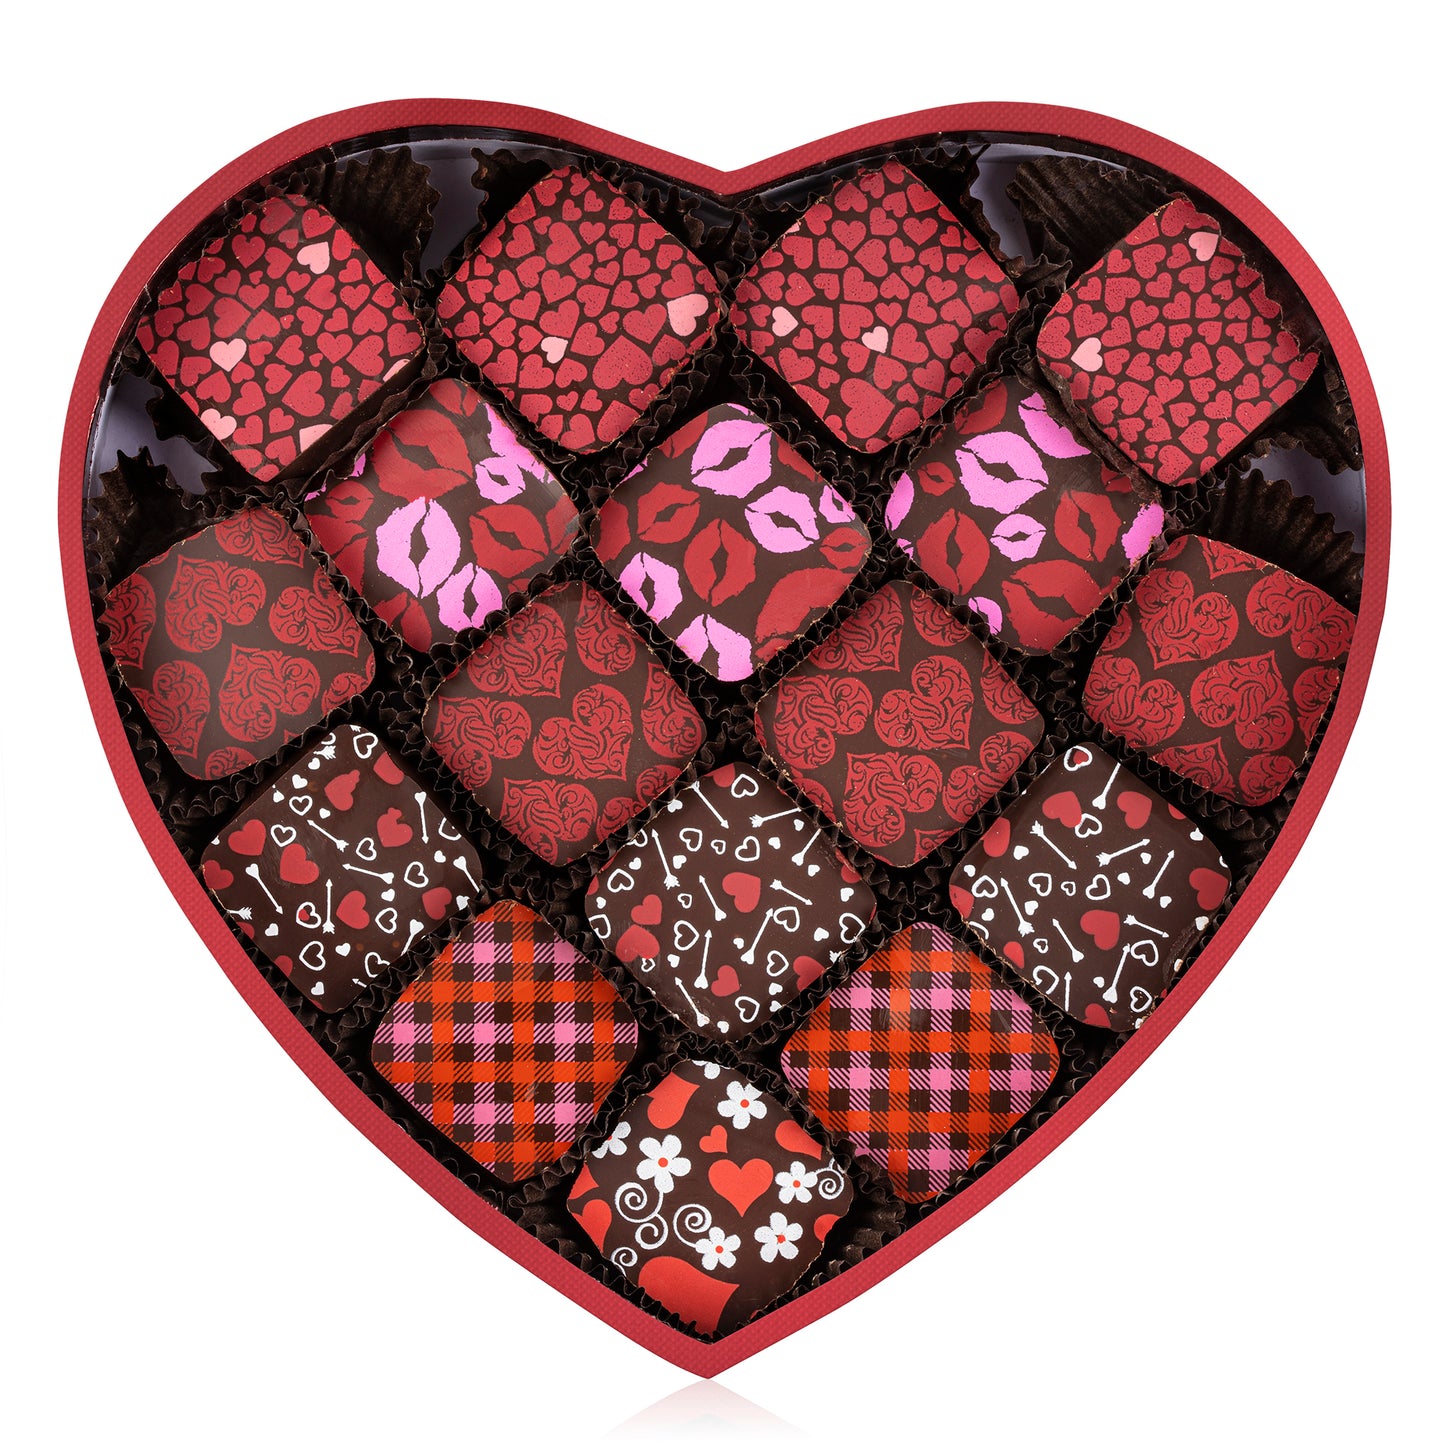 Black Heart-Shape Box with Chocolate & Eternal Roses ~ Caja de corazon –  truulovecf